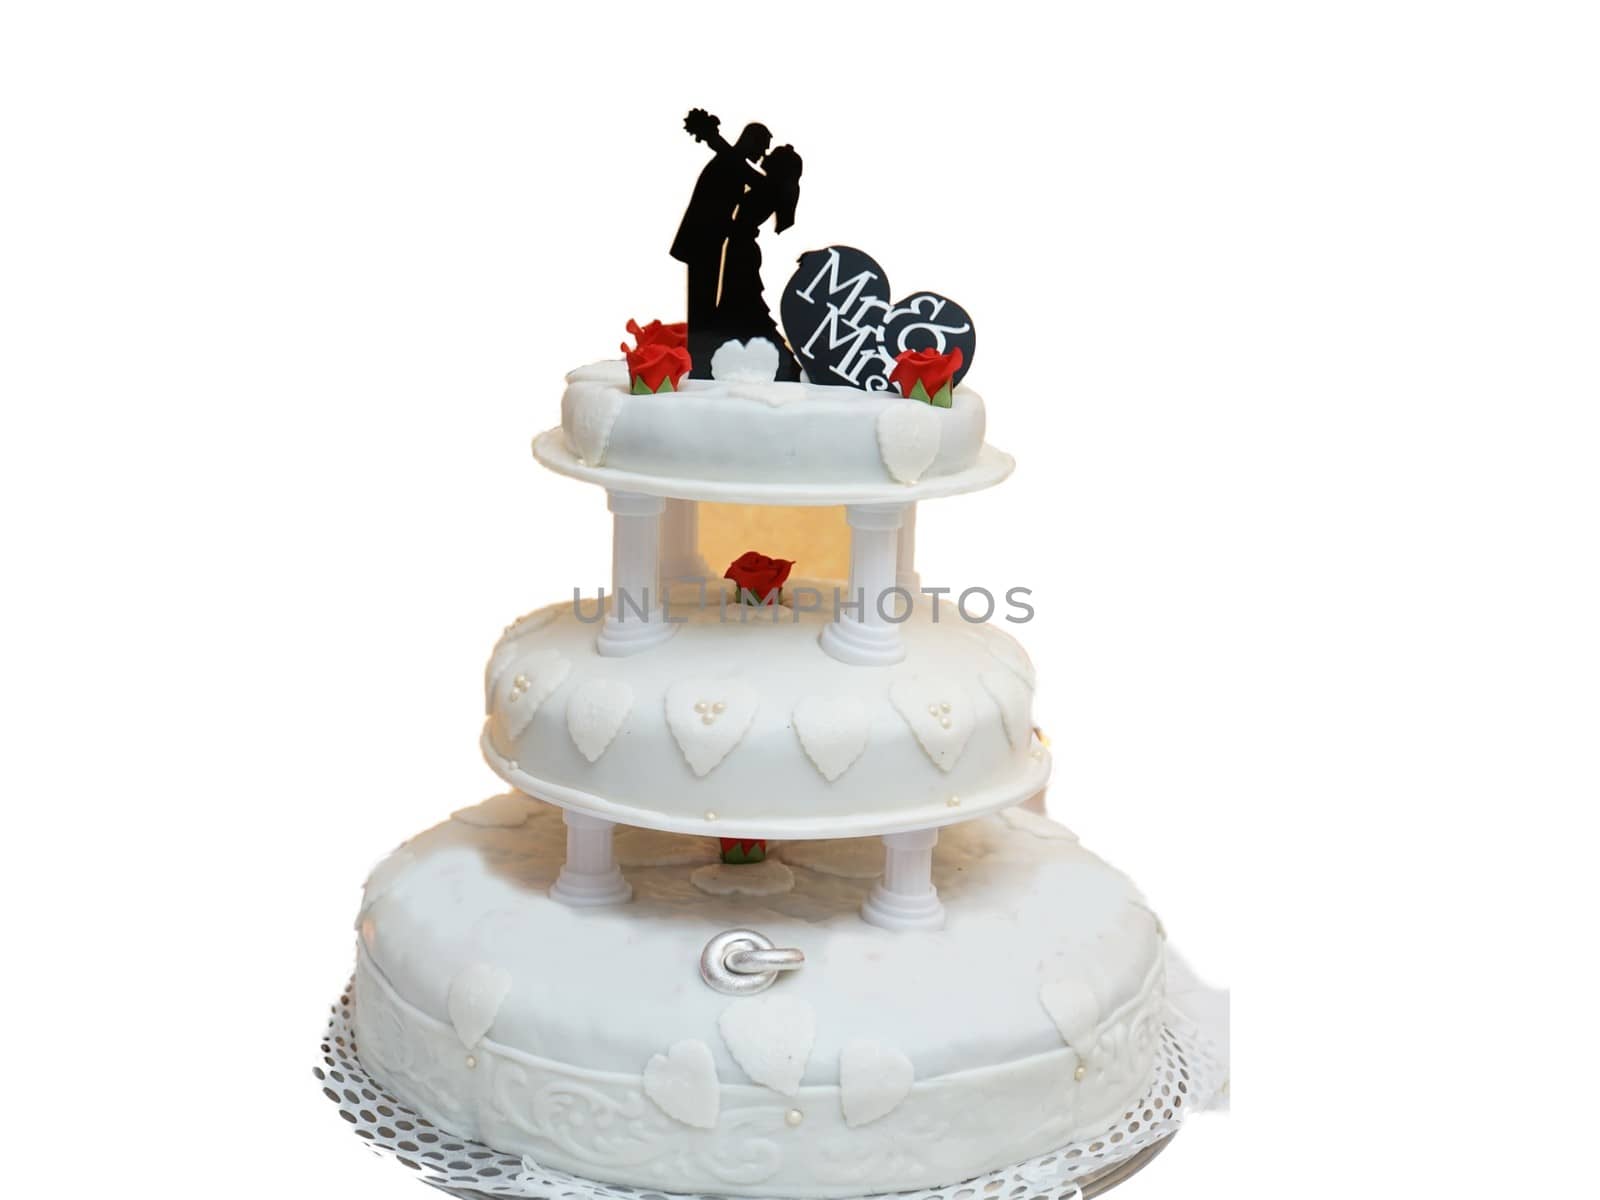 A wedding cake. High quality photo